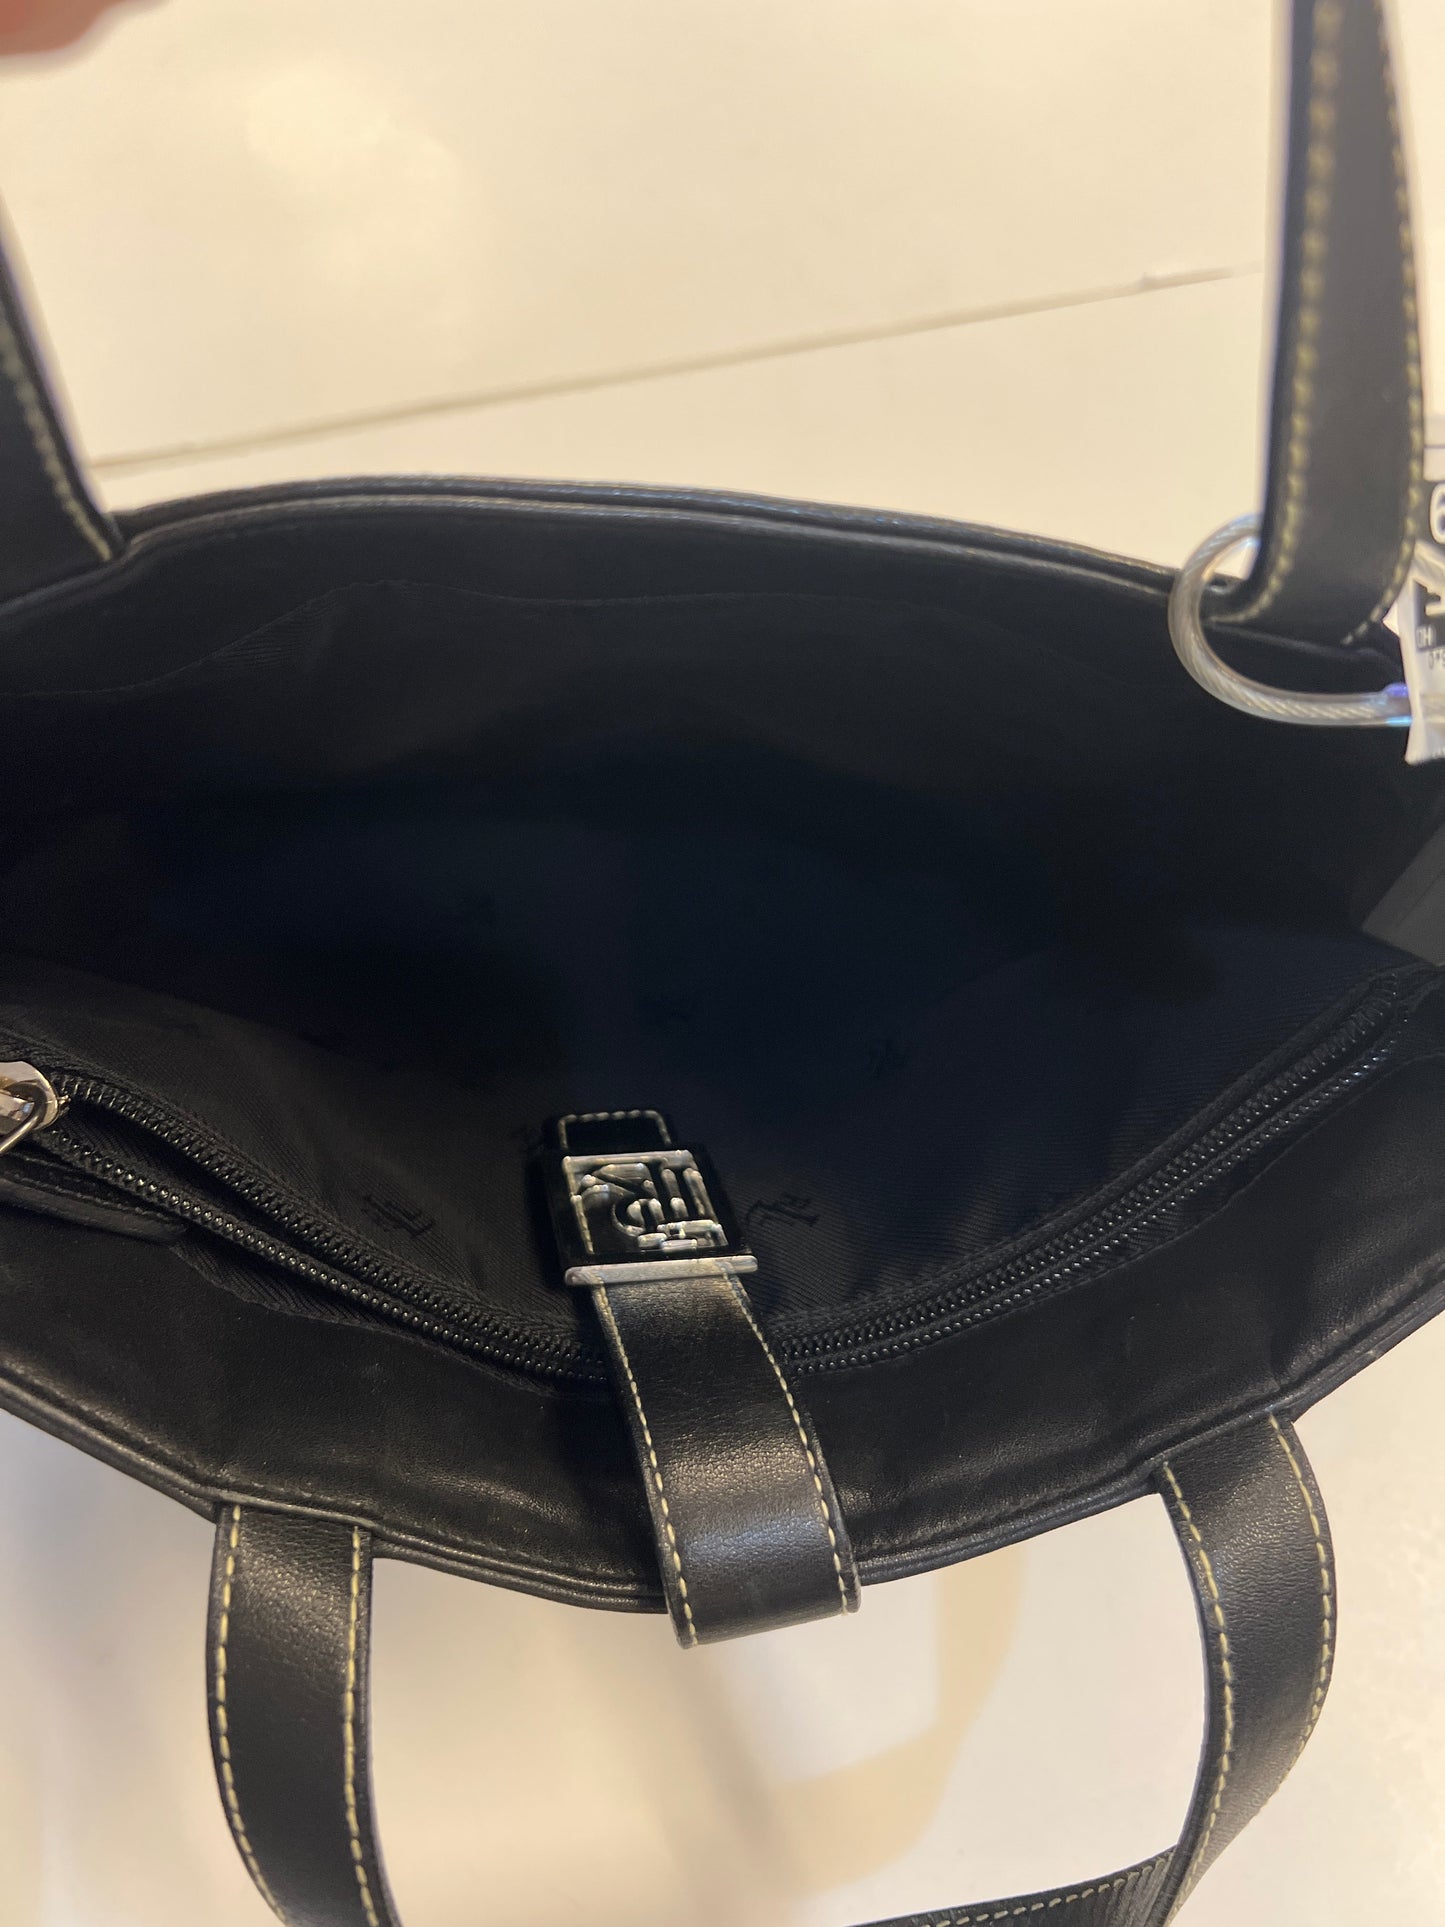 Handbag Ralph Lauren, Size Medium